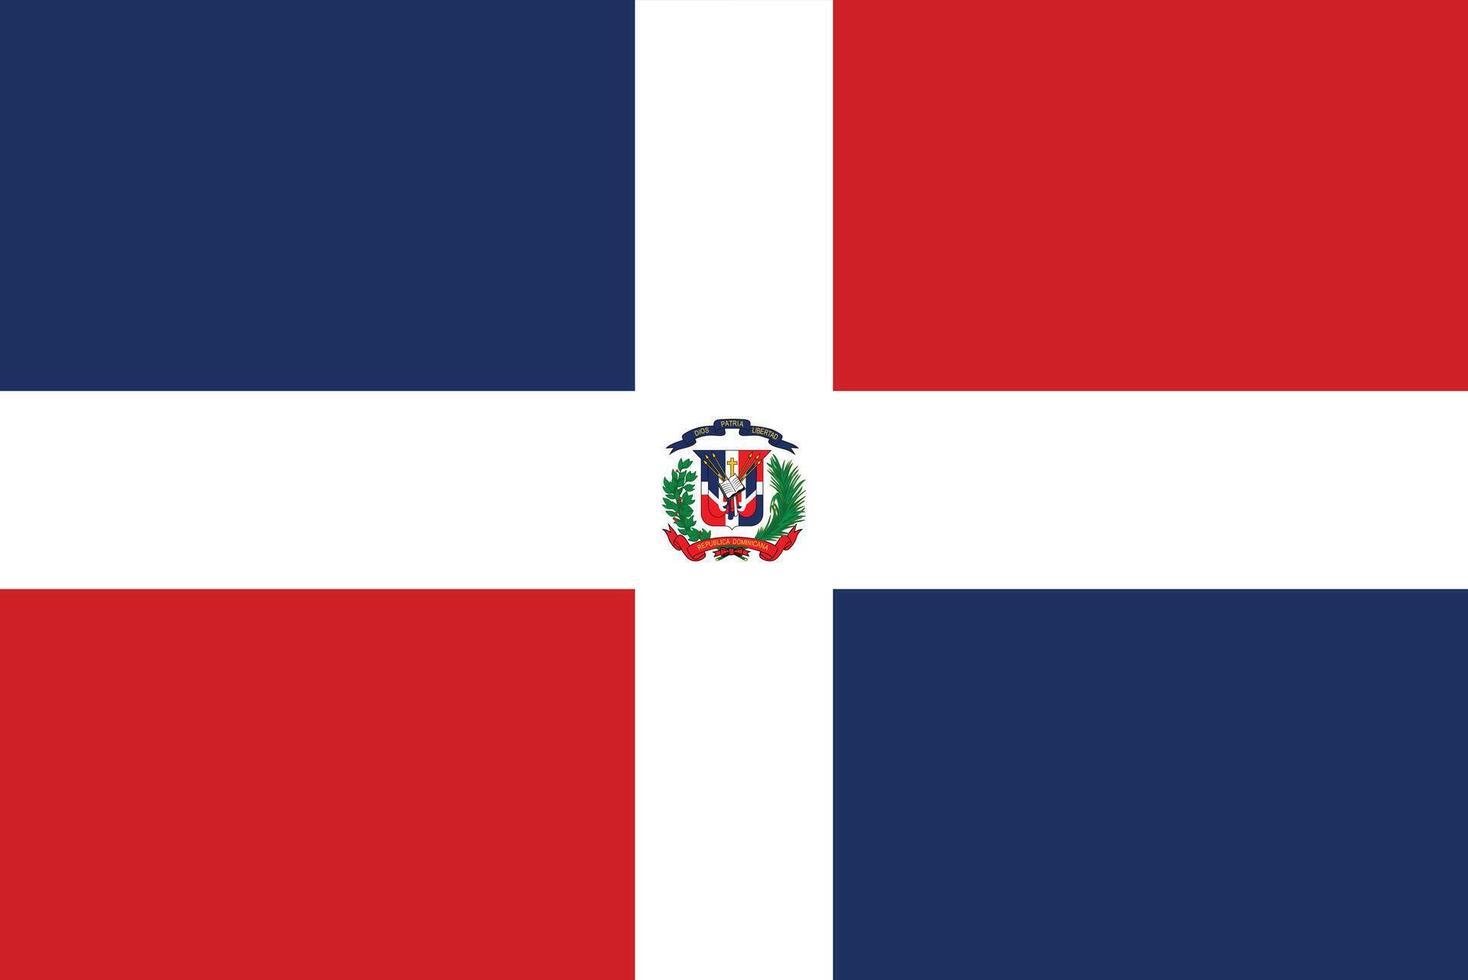 Flat Illustration of Dominican Republic national flag. Dominican Republic flag design. vector